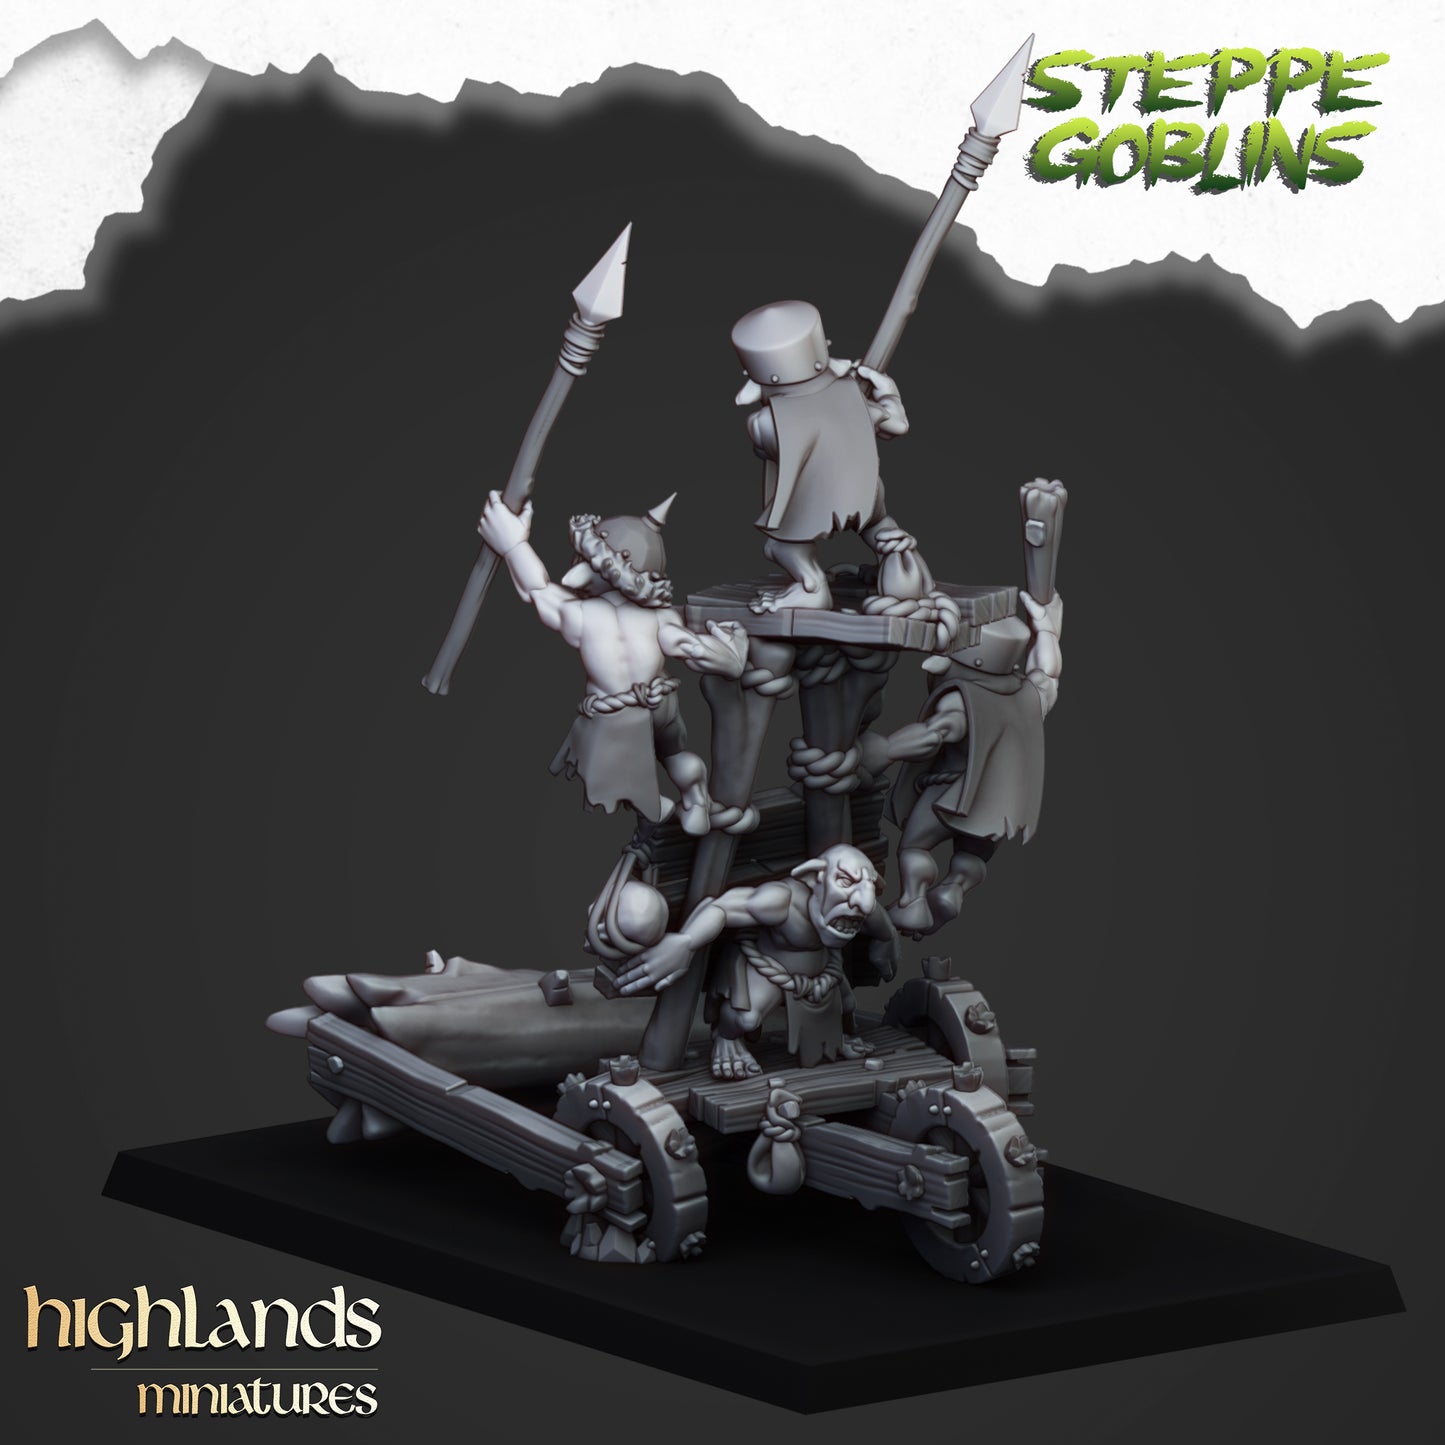 Steppe Goblors Roller from Highlands Miniatures